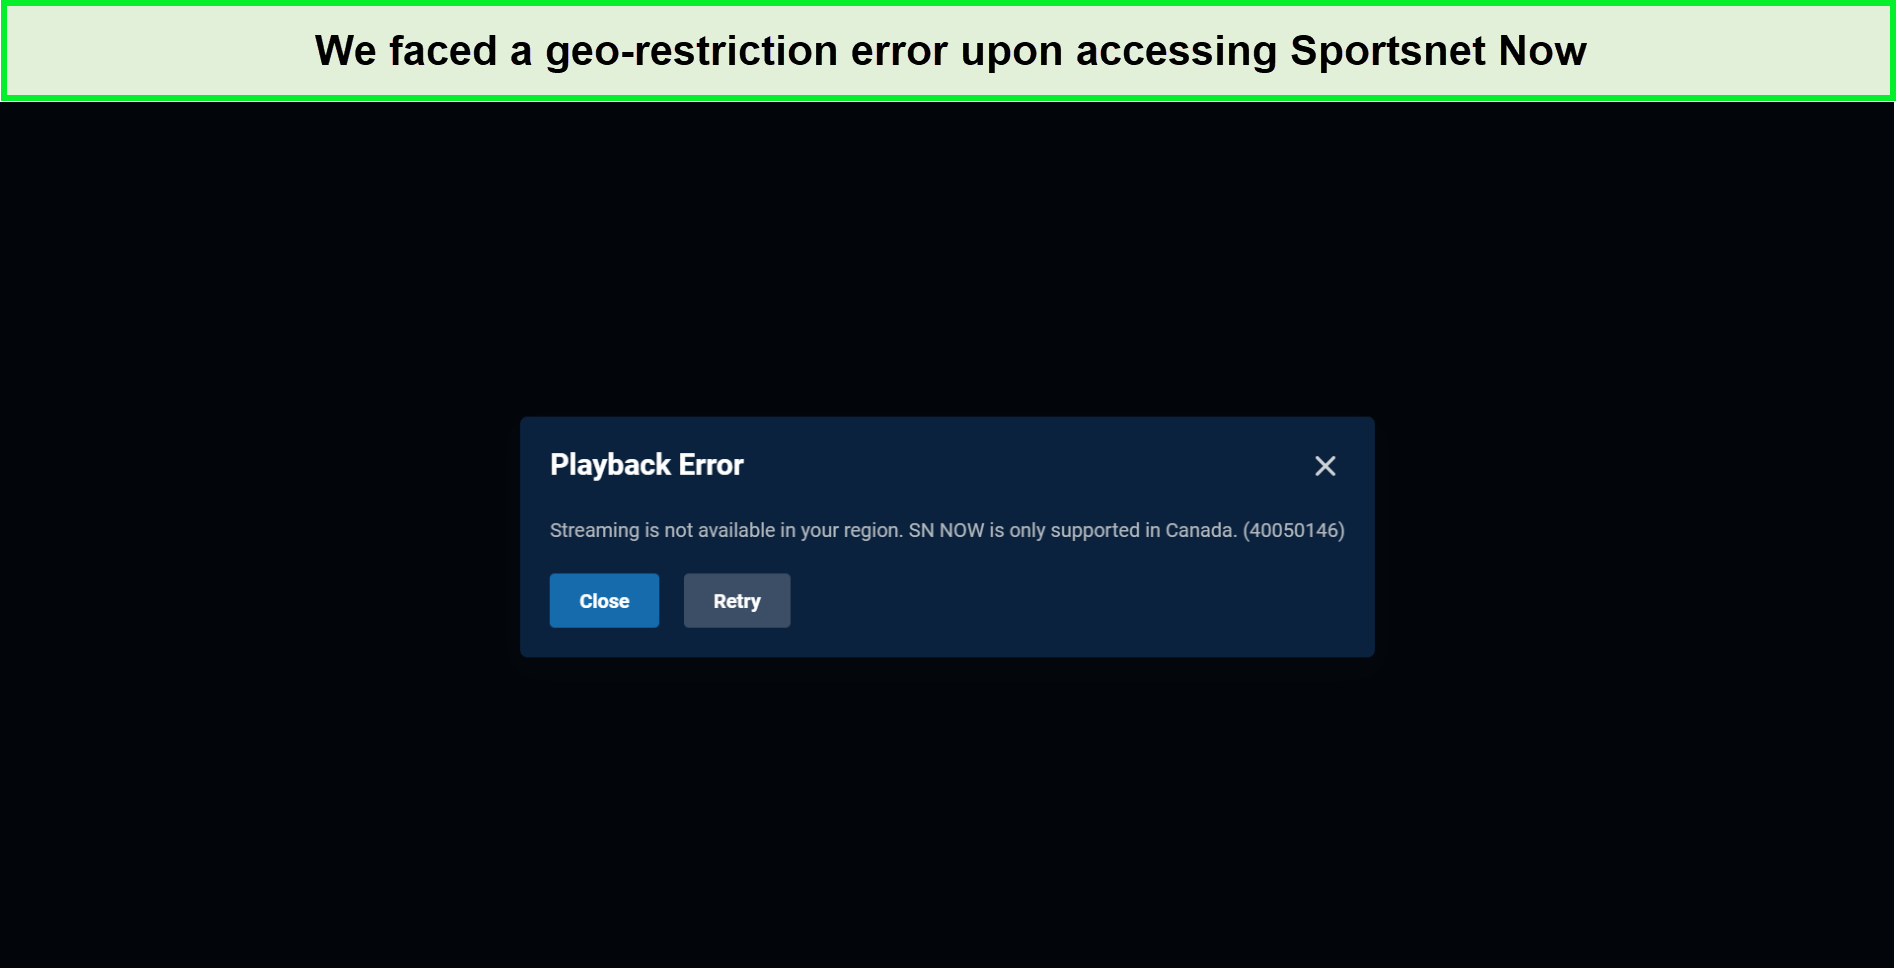 sportsnet-now-in-UK-geo-restriction-error